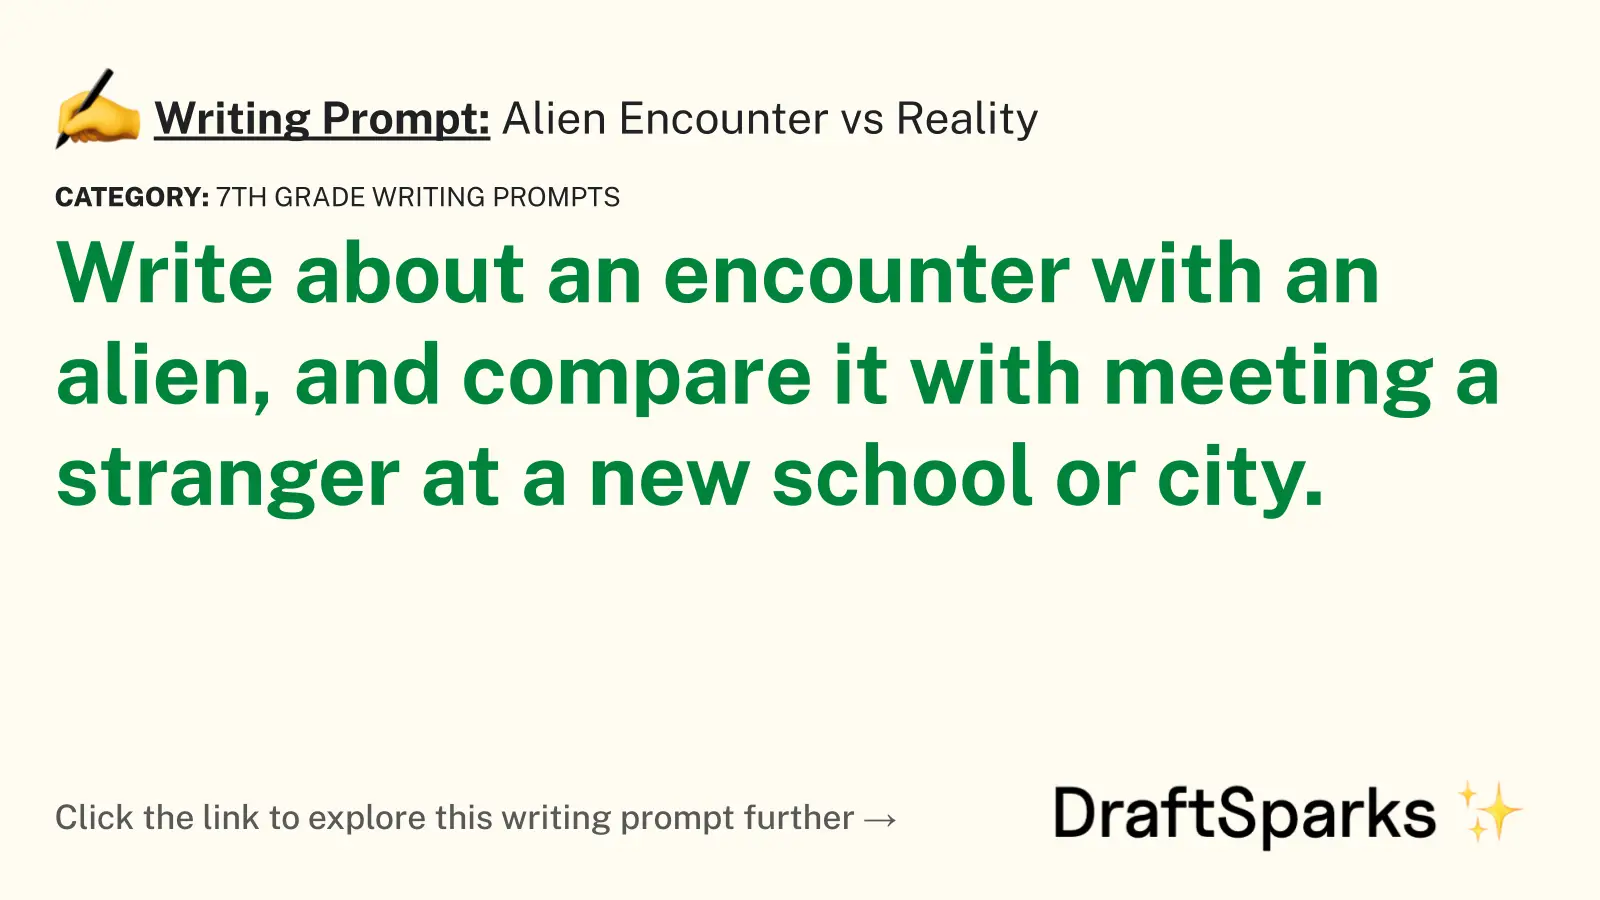 Alien Encounter vs Reality